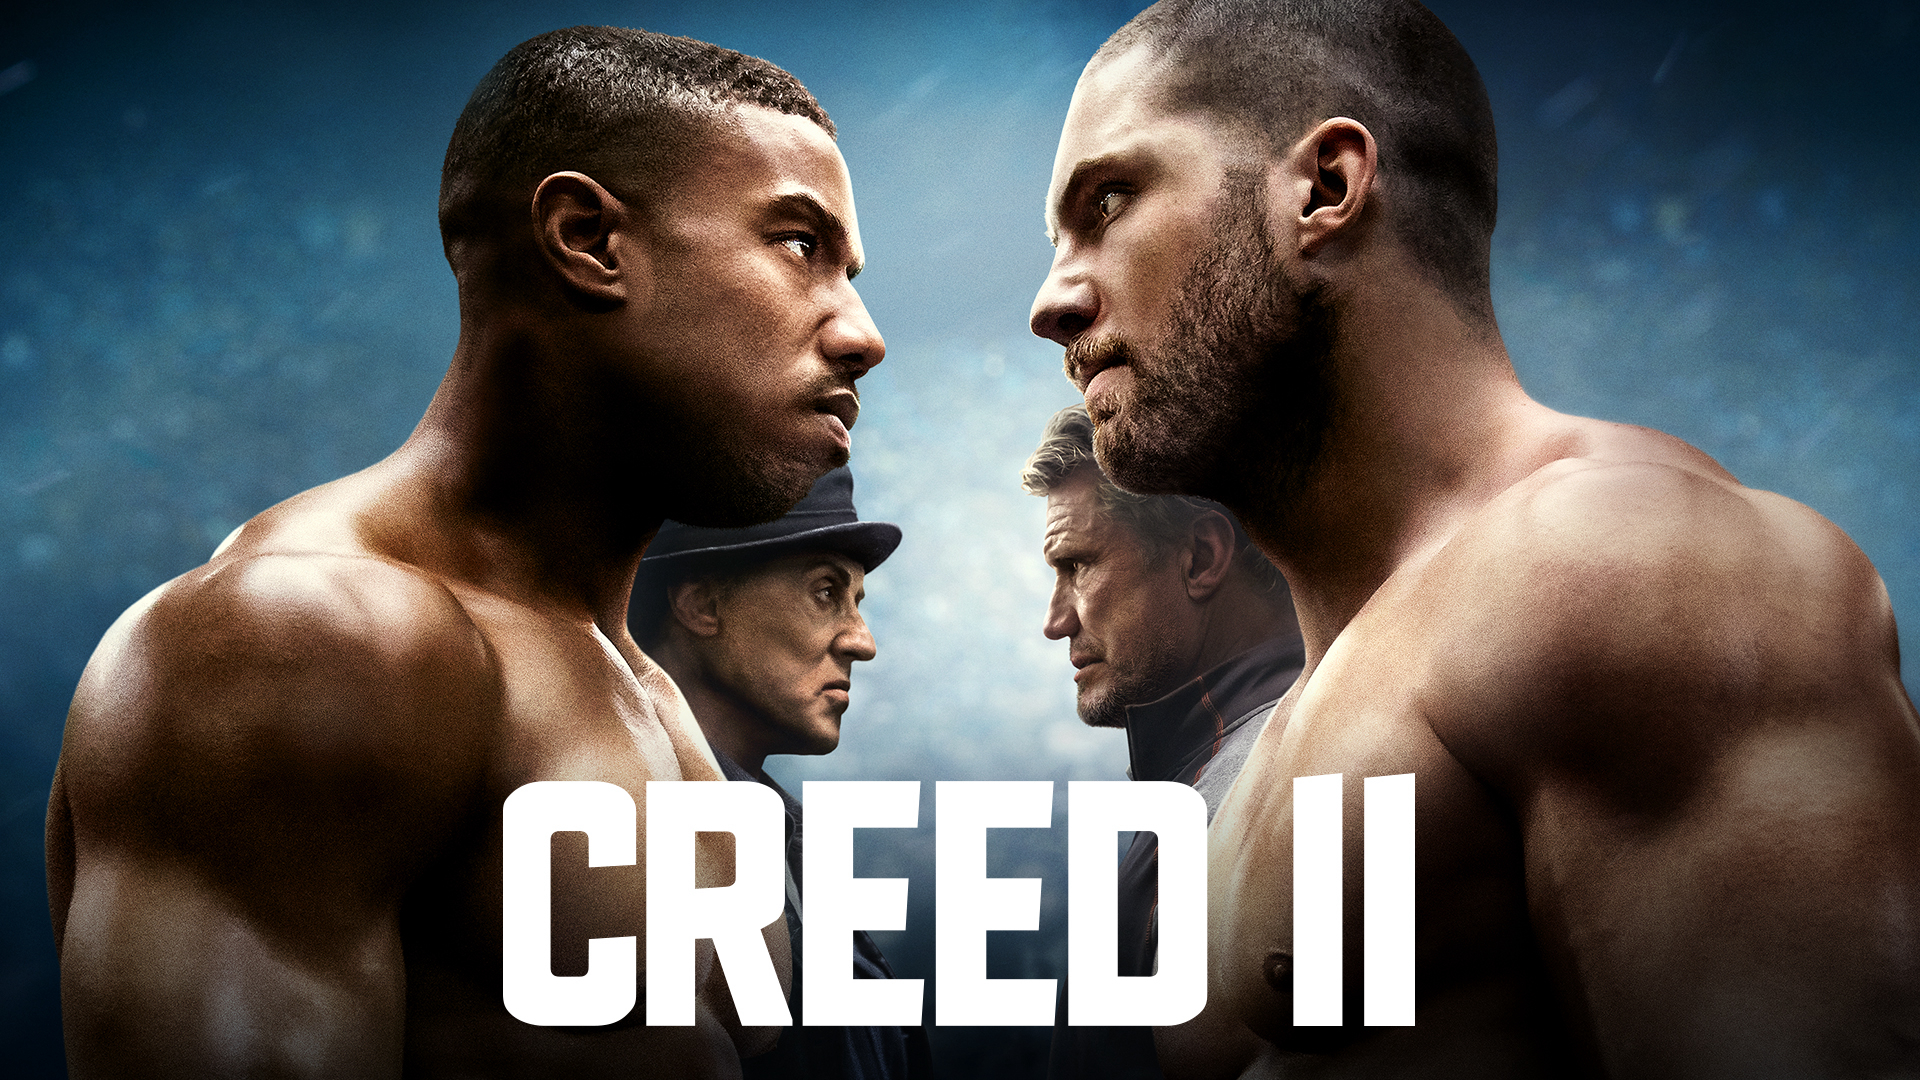 Poster Phim Tay Đấm Huyền Thoại 2 (Creed II)